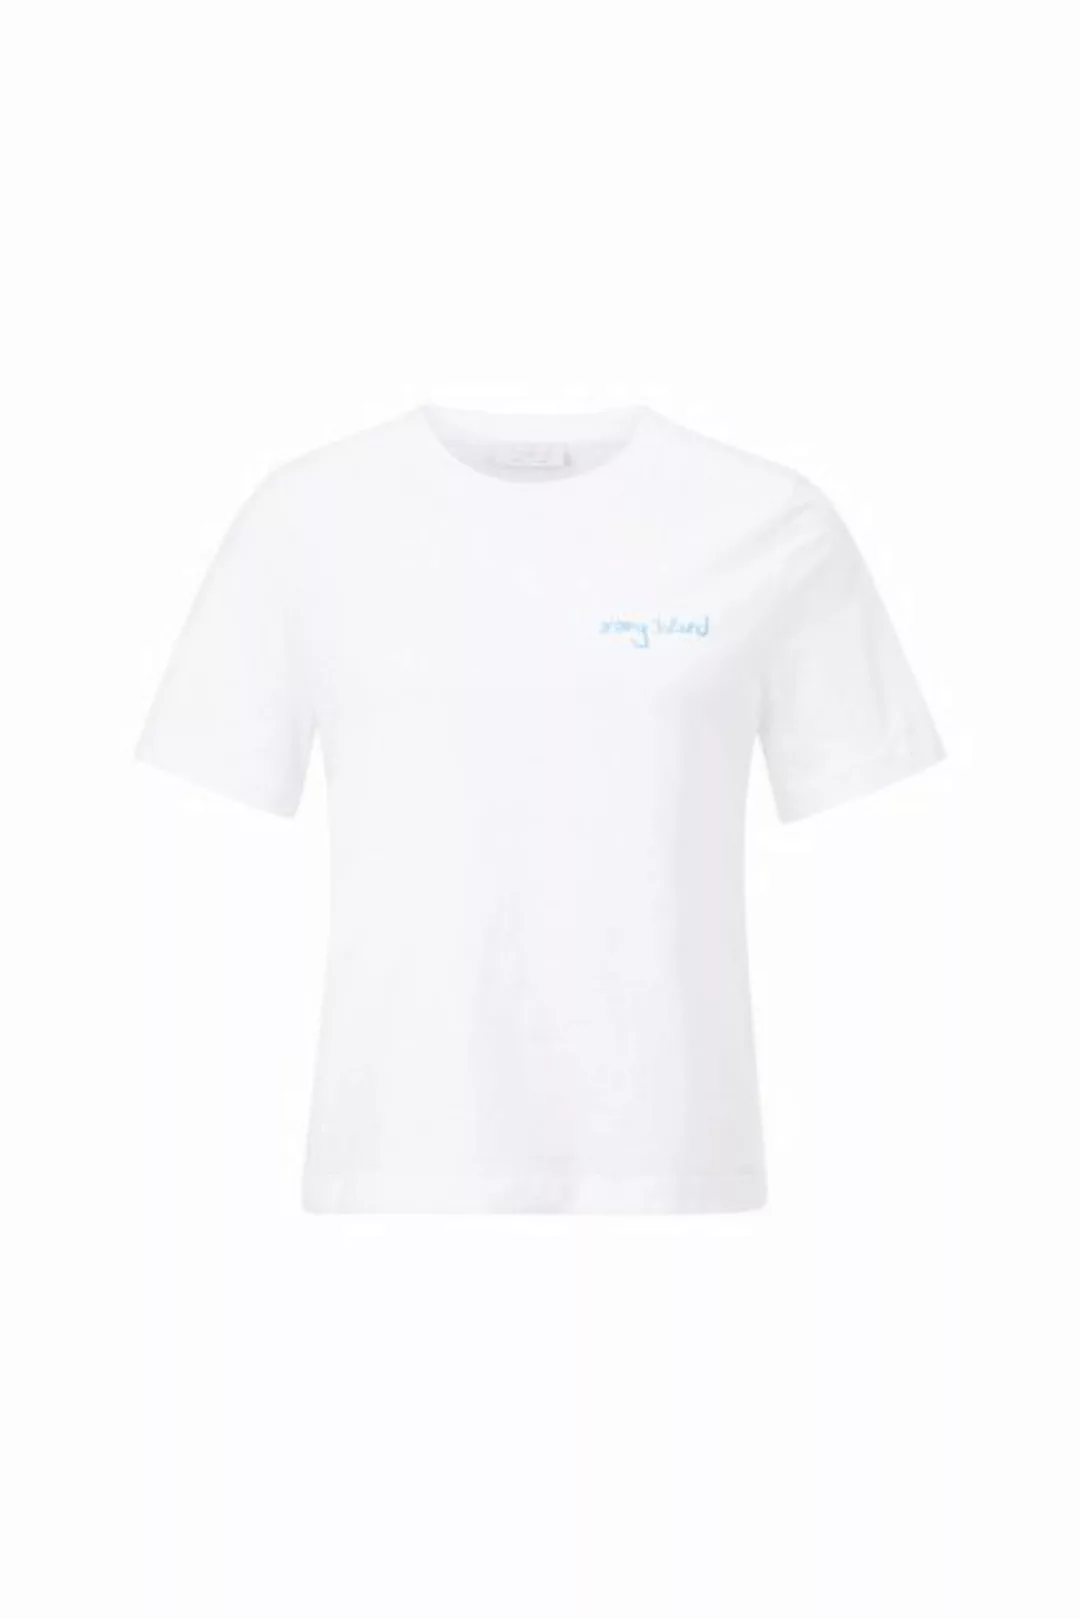 Rich & Royal T-Shirt Elegant Fit T-Shirt Long Island org, white günstig online kaufen